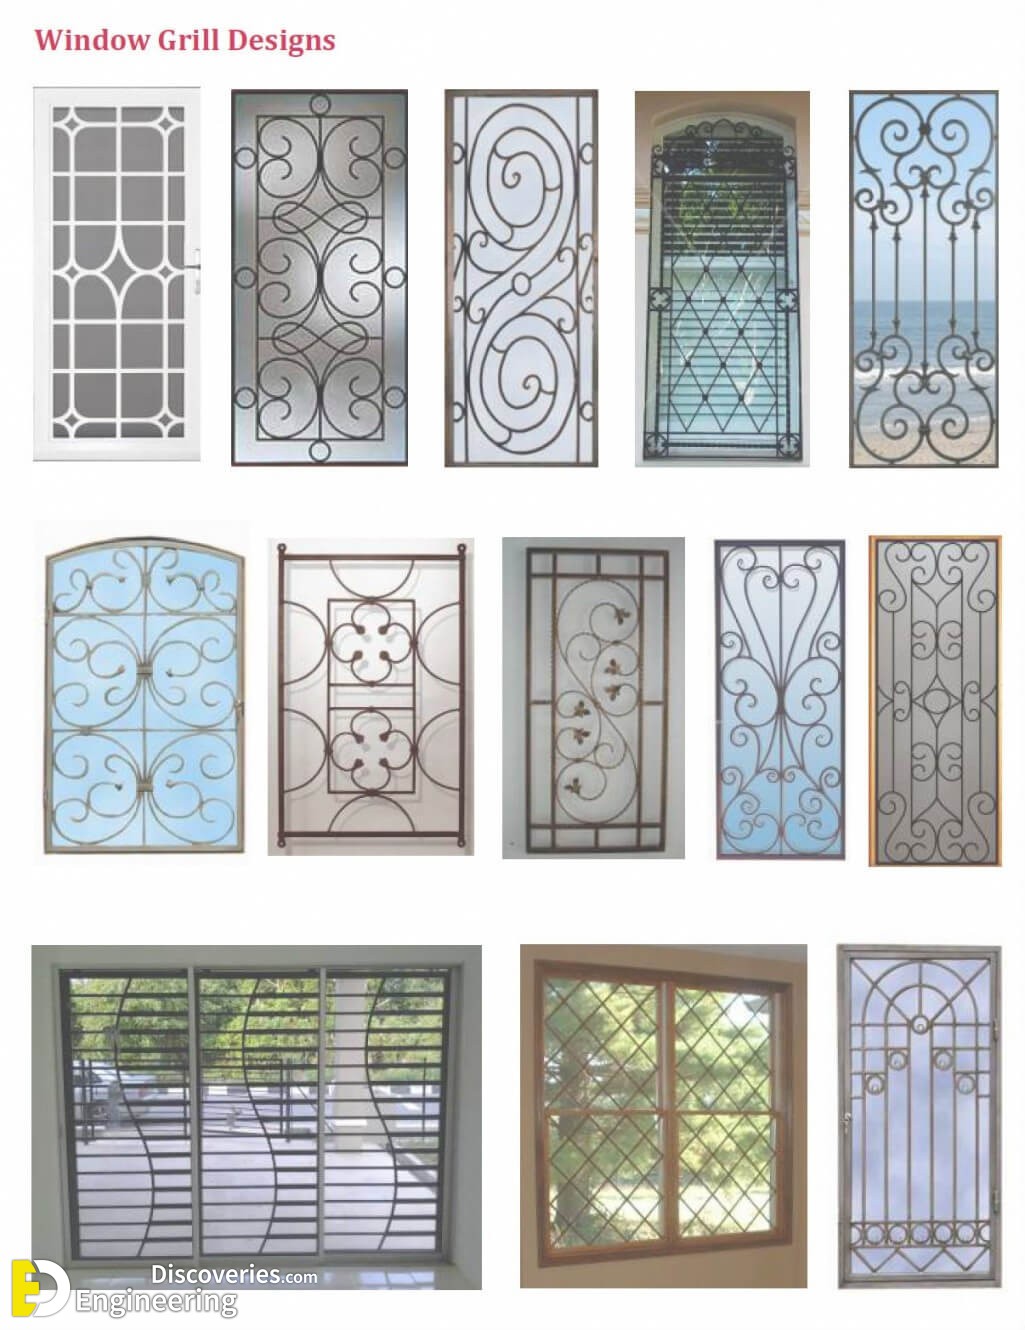 https://engineeringdiscoveries.com/wp-content/uploads/2020/08/lovely-sri-lanka-window-grill-designs-ideas-house-g.jpg